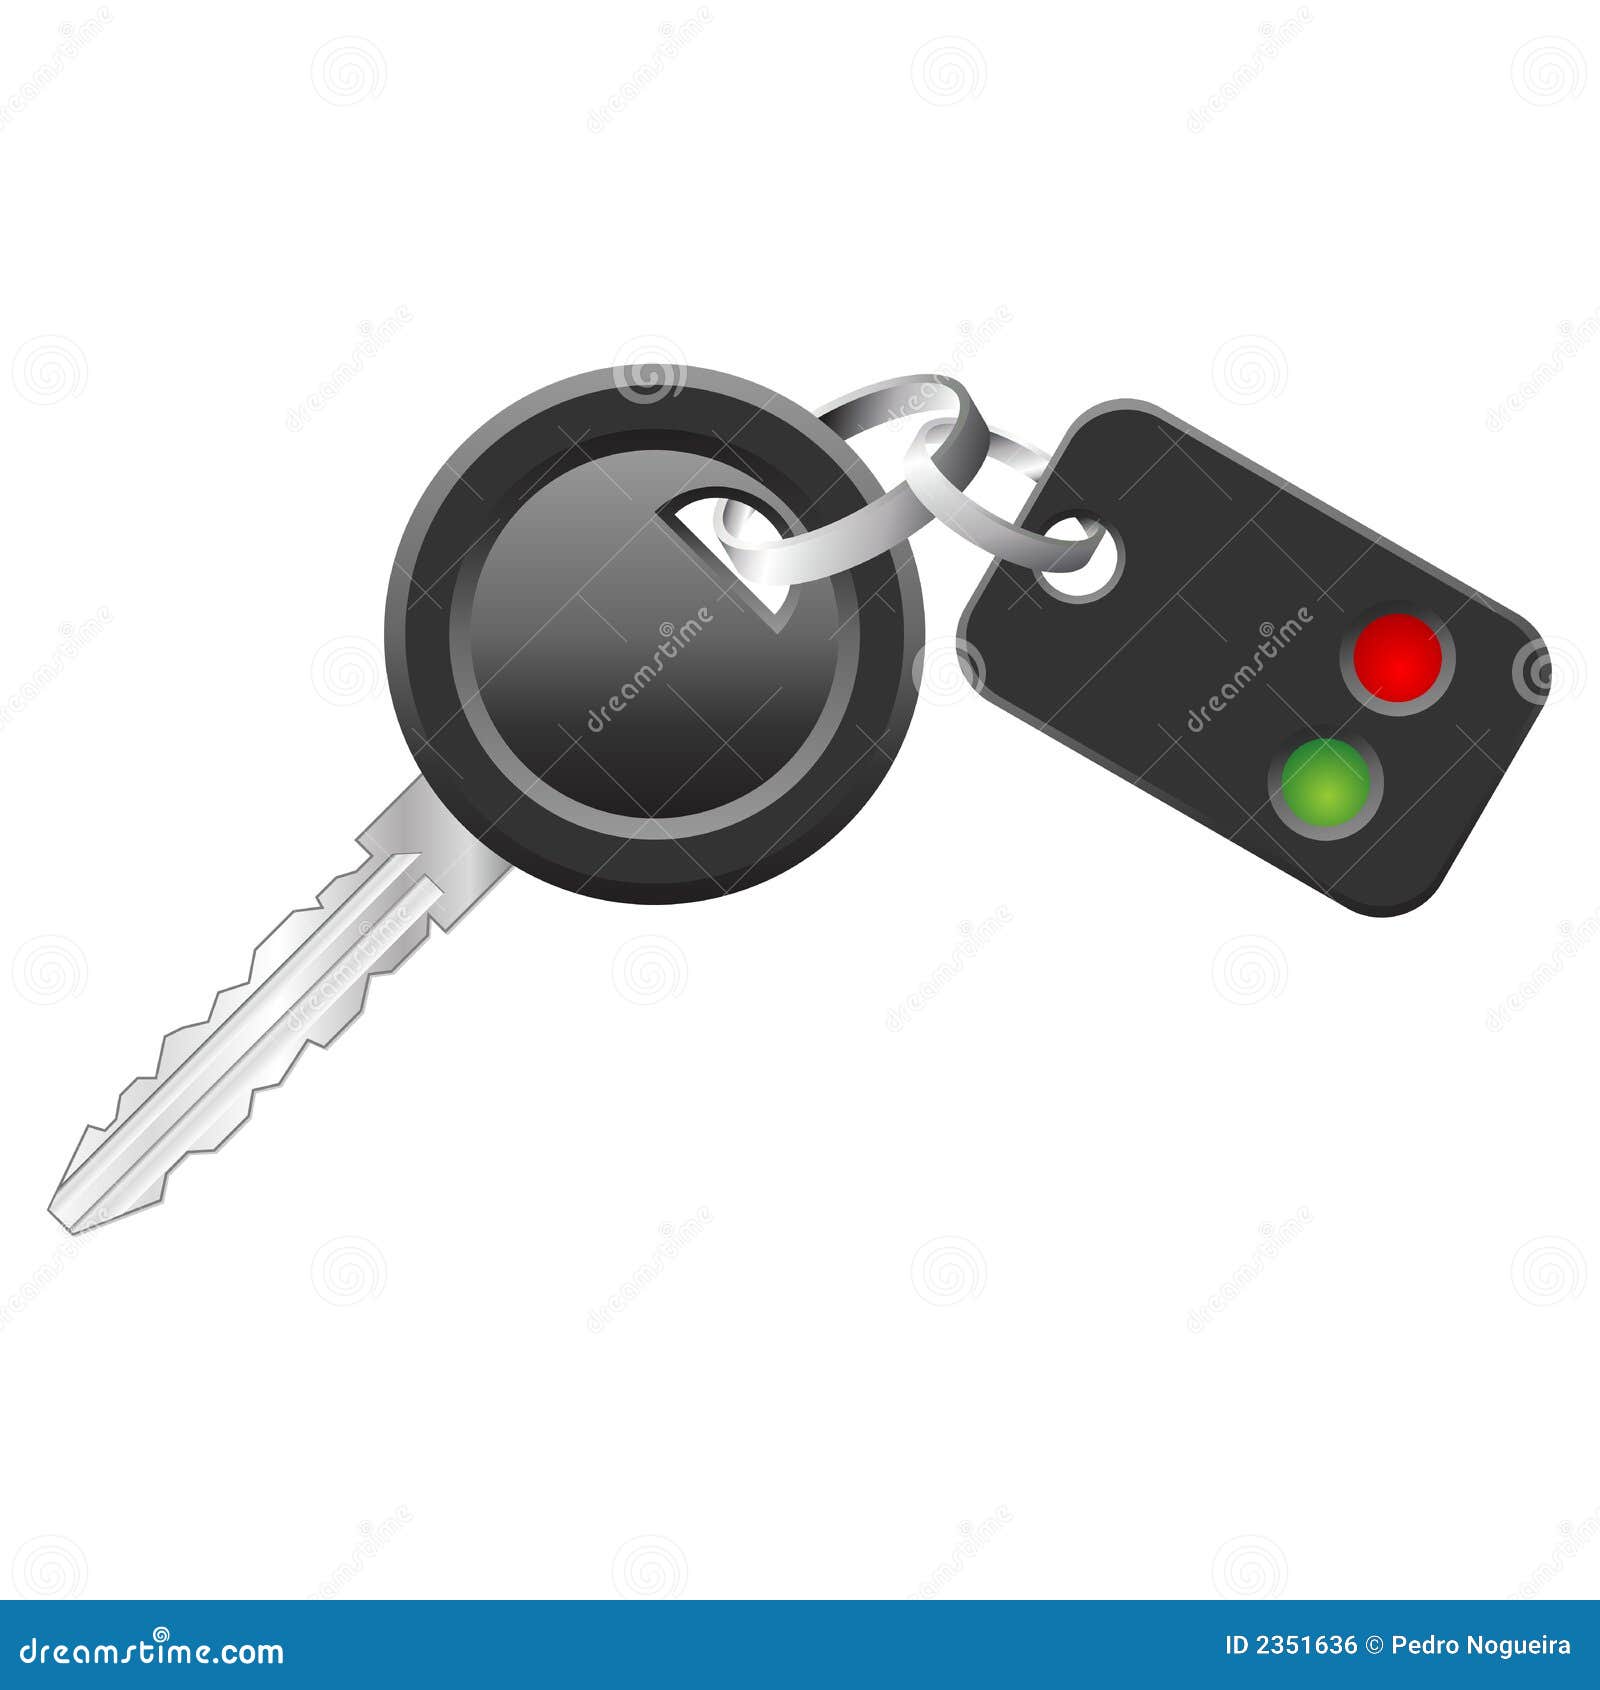 clipart car keys - photo #8